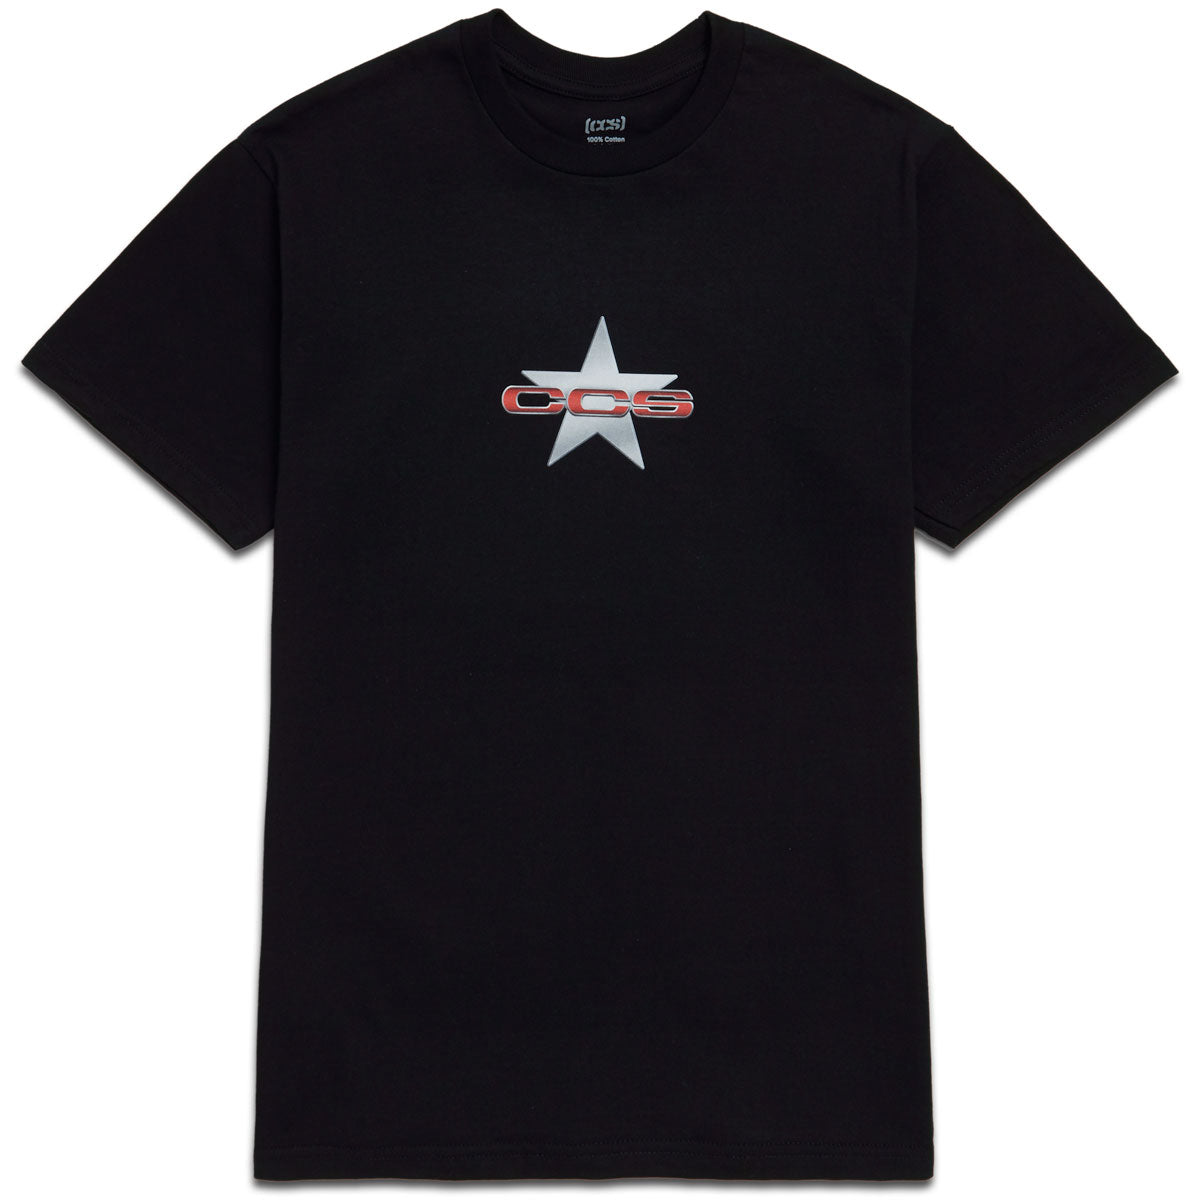 CCS 97 Star T-Shirt - Black - LG image 1